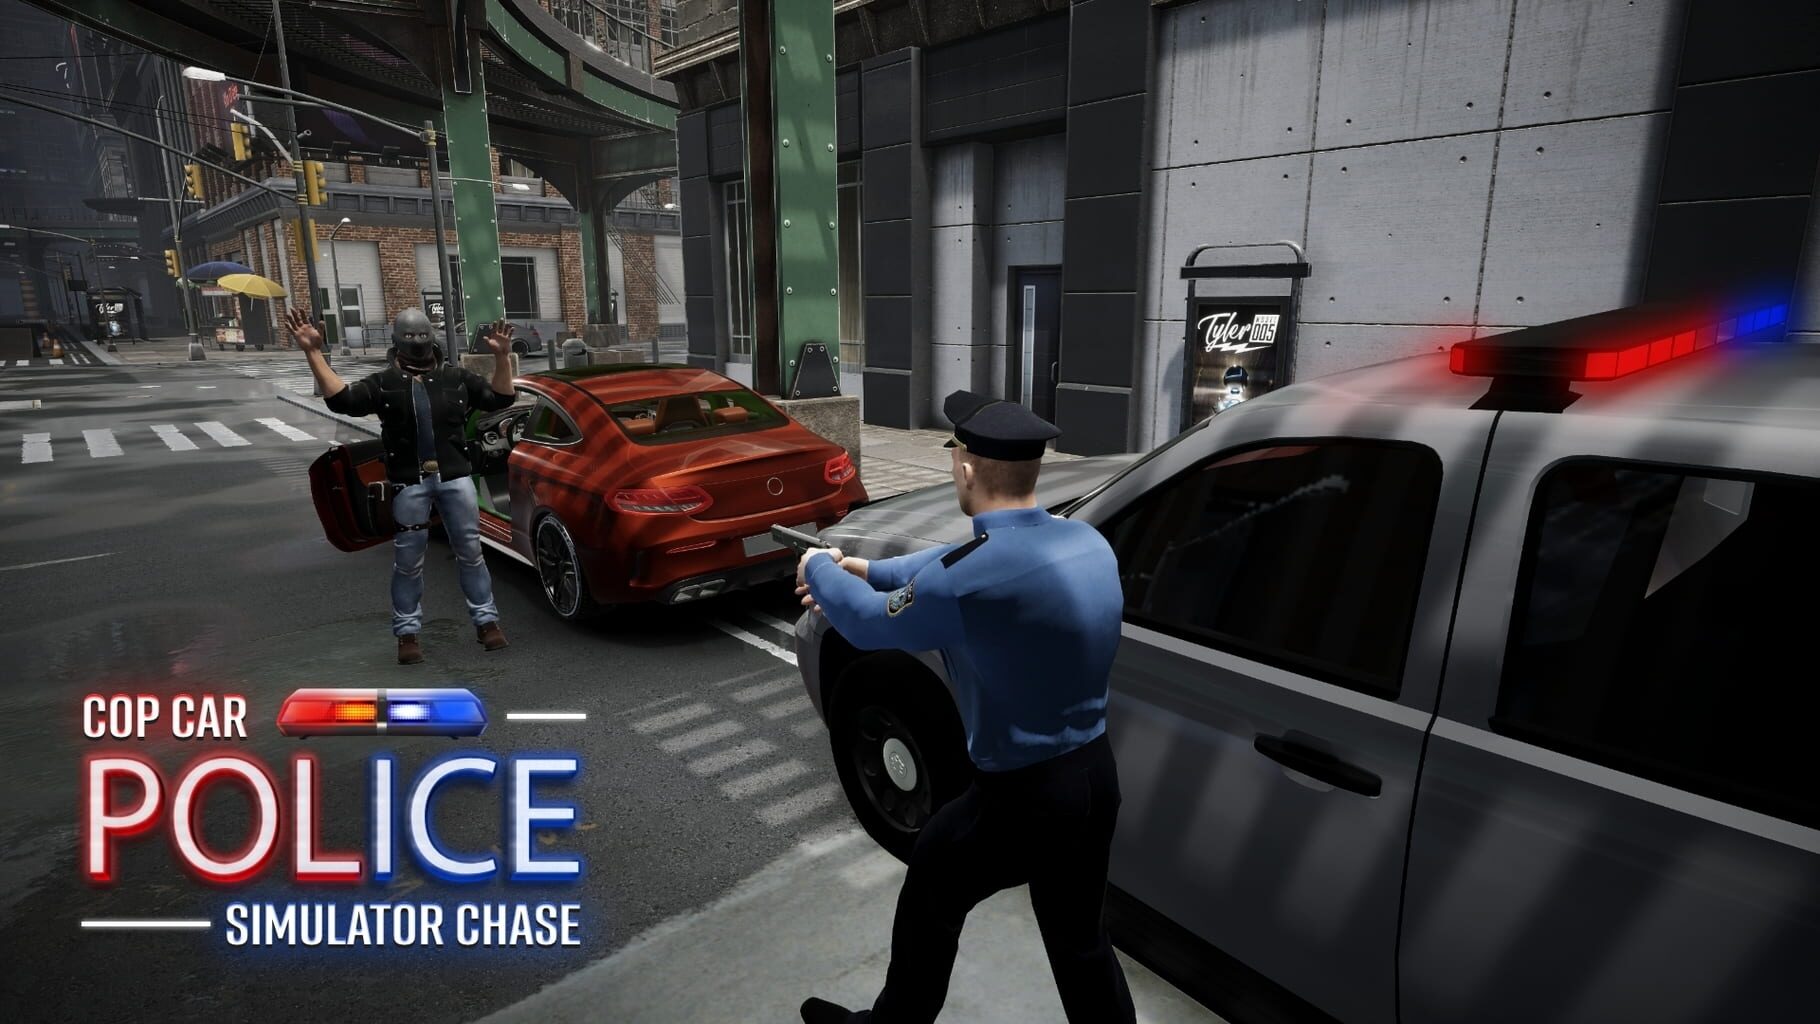 Cop Car Police Simulator Chase artwork